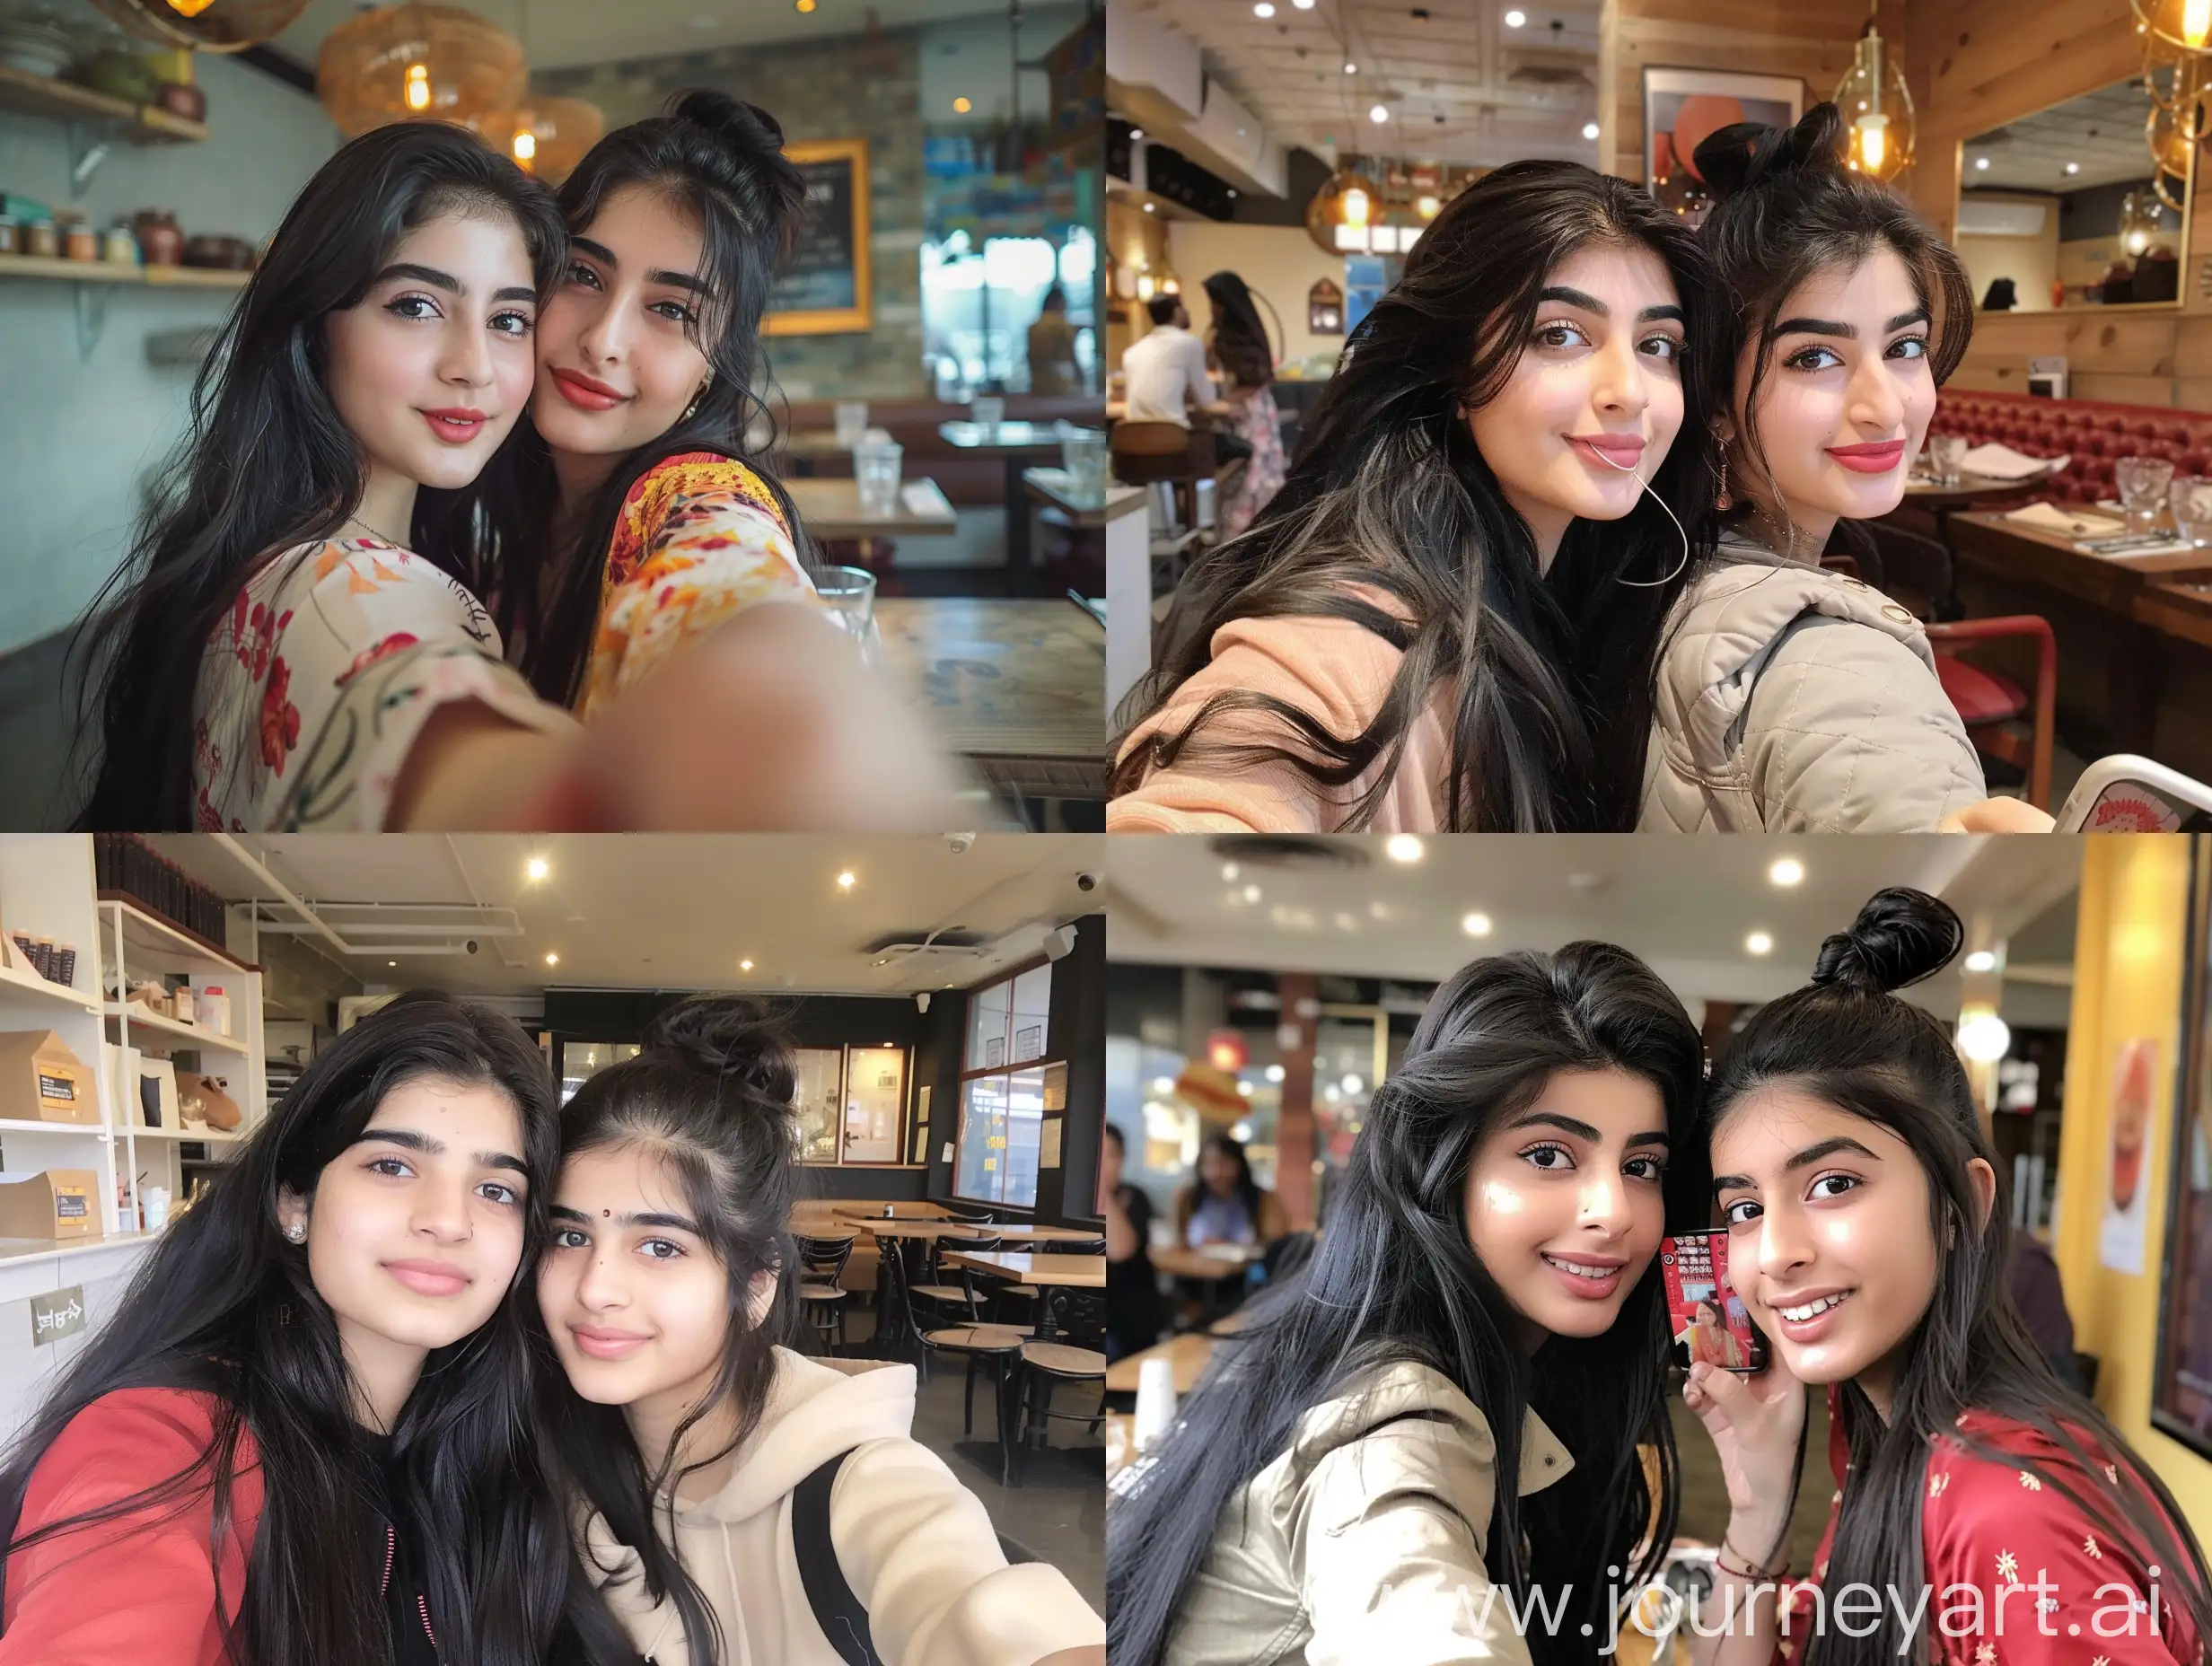 Stylish-British-Pakistani-Women-Capturing-Selfie-Moment-in-Restaurant